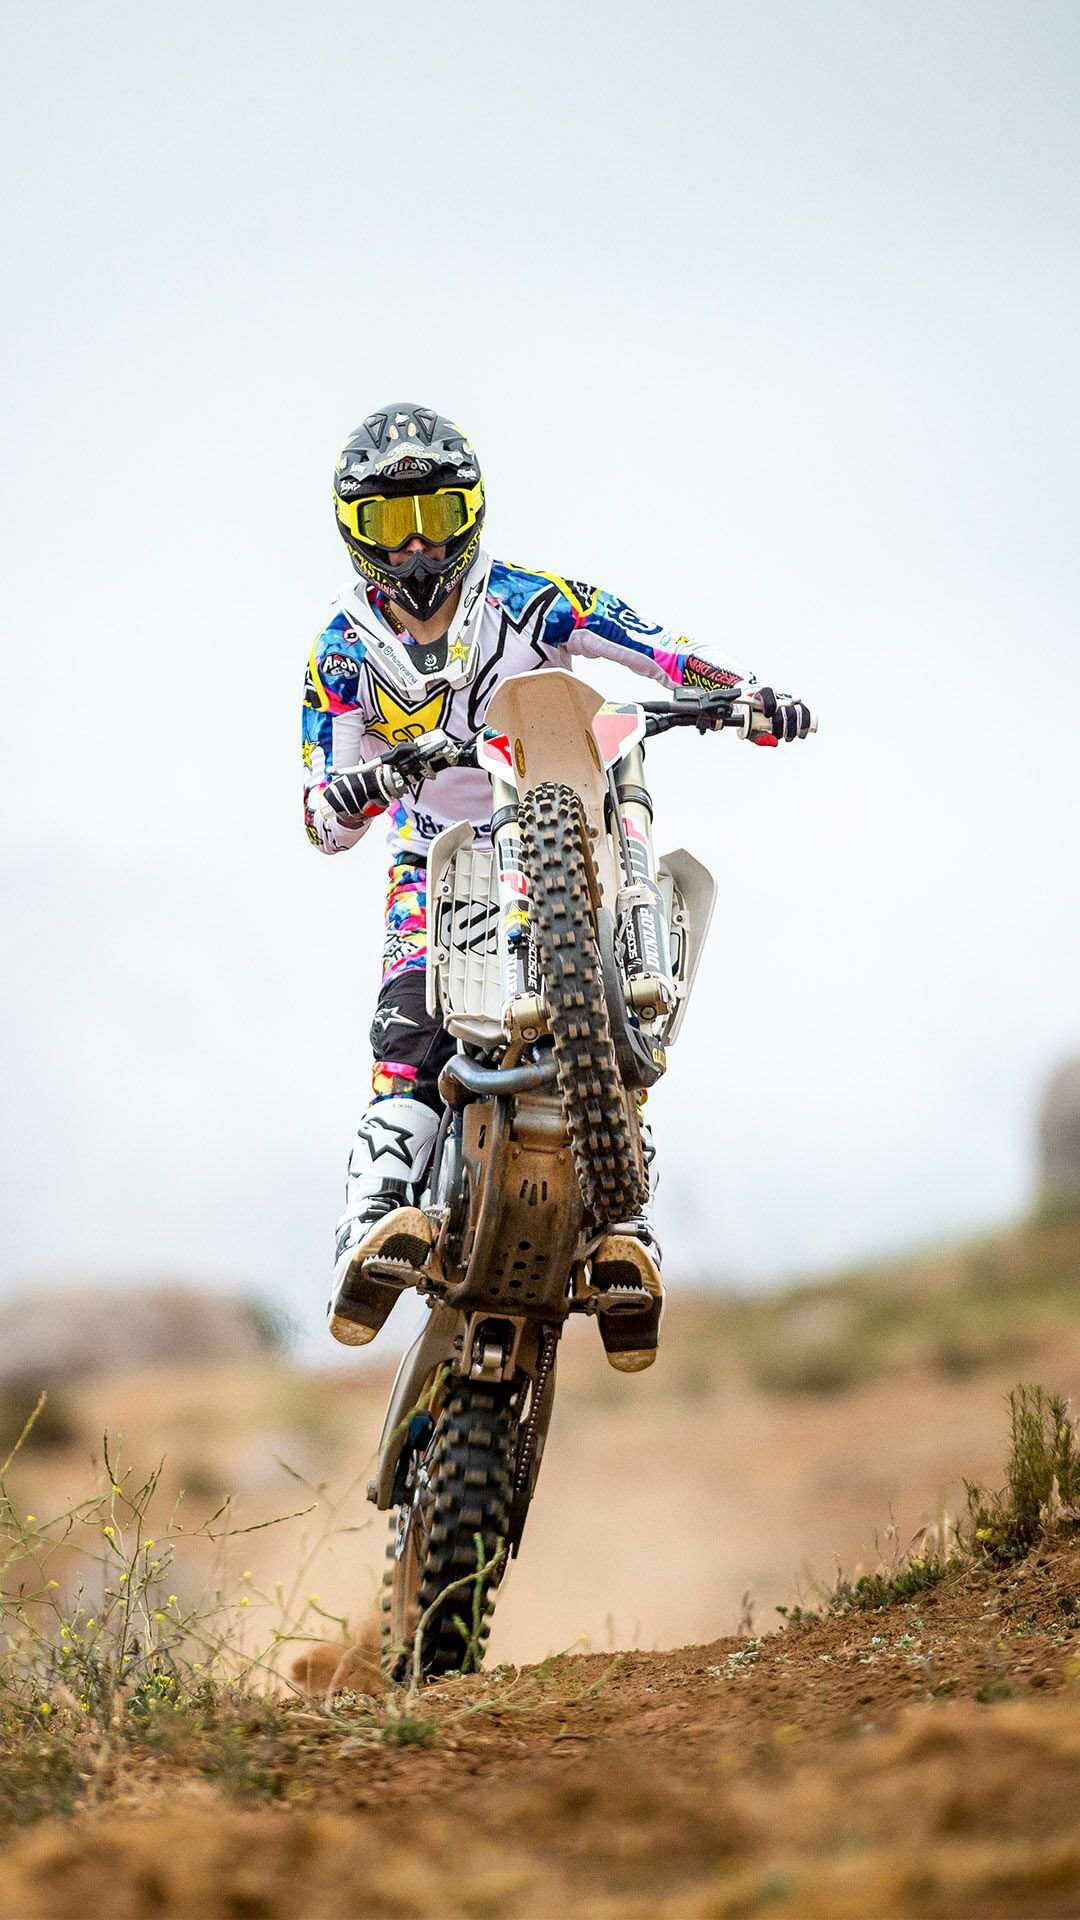 Bike: Motocross, An off-road motorcycle racing, Motorbike. 1080x1920 Full HD Background.